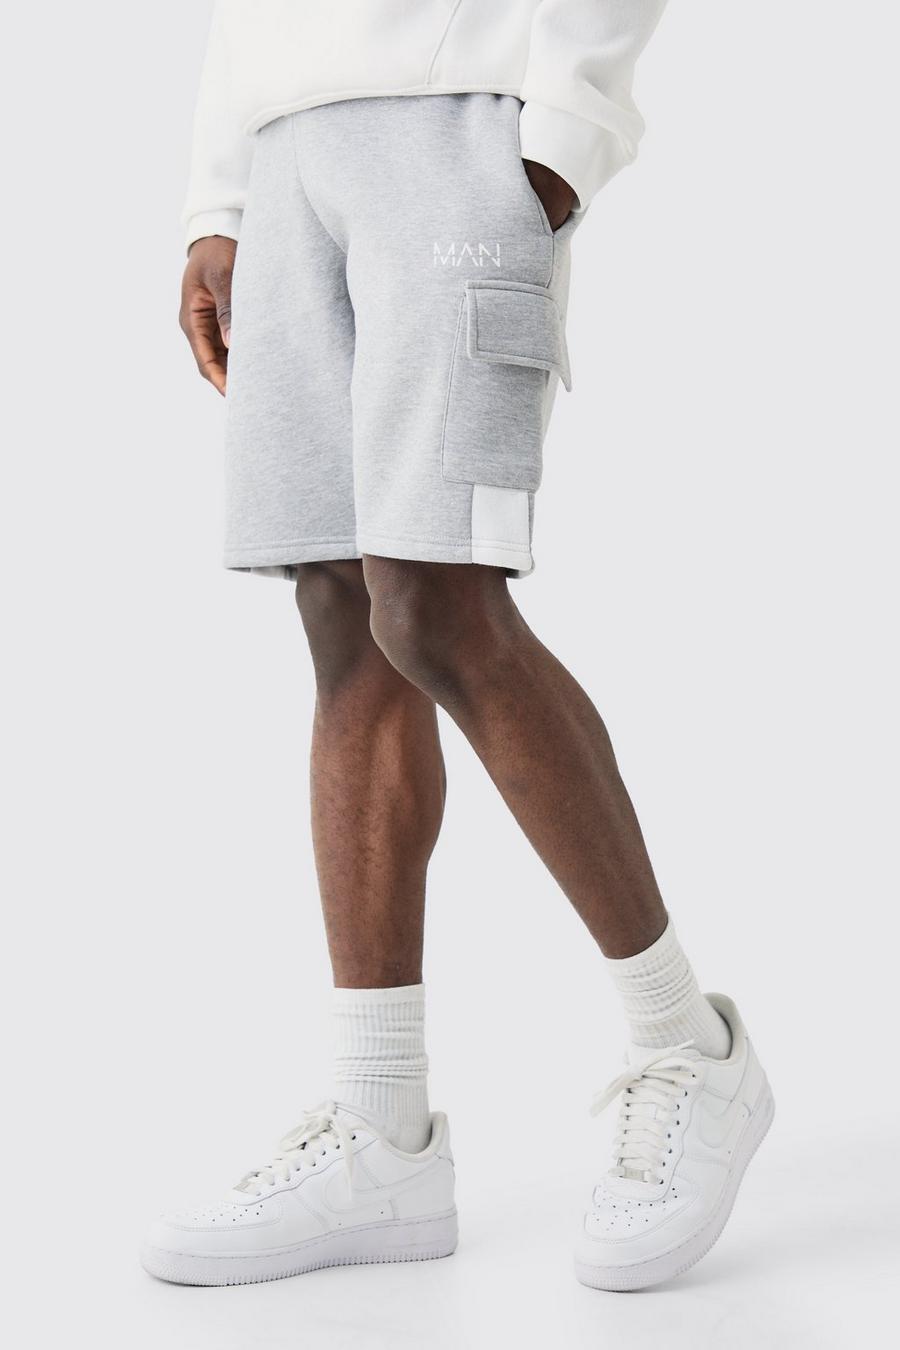 Grey Man Gusset Colour Block Pixel Camo Slim Mid Length anos Shorts